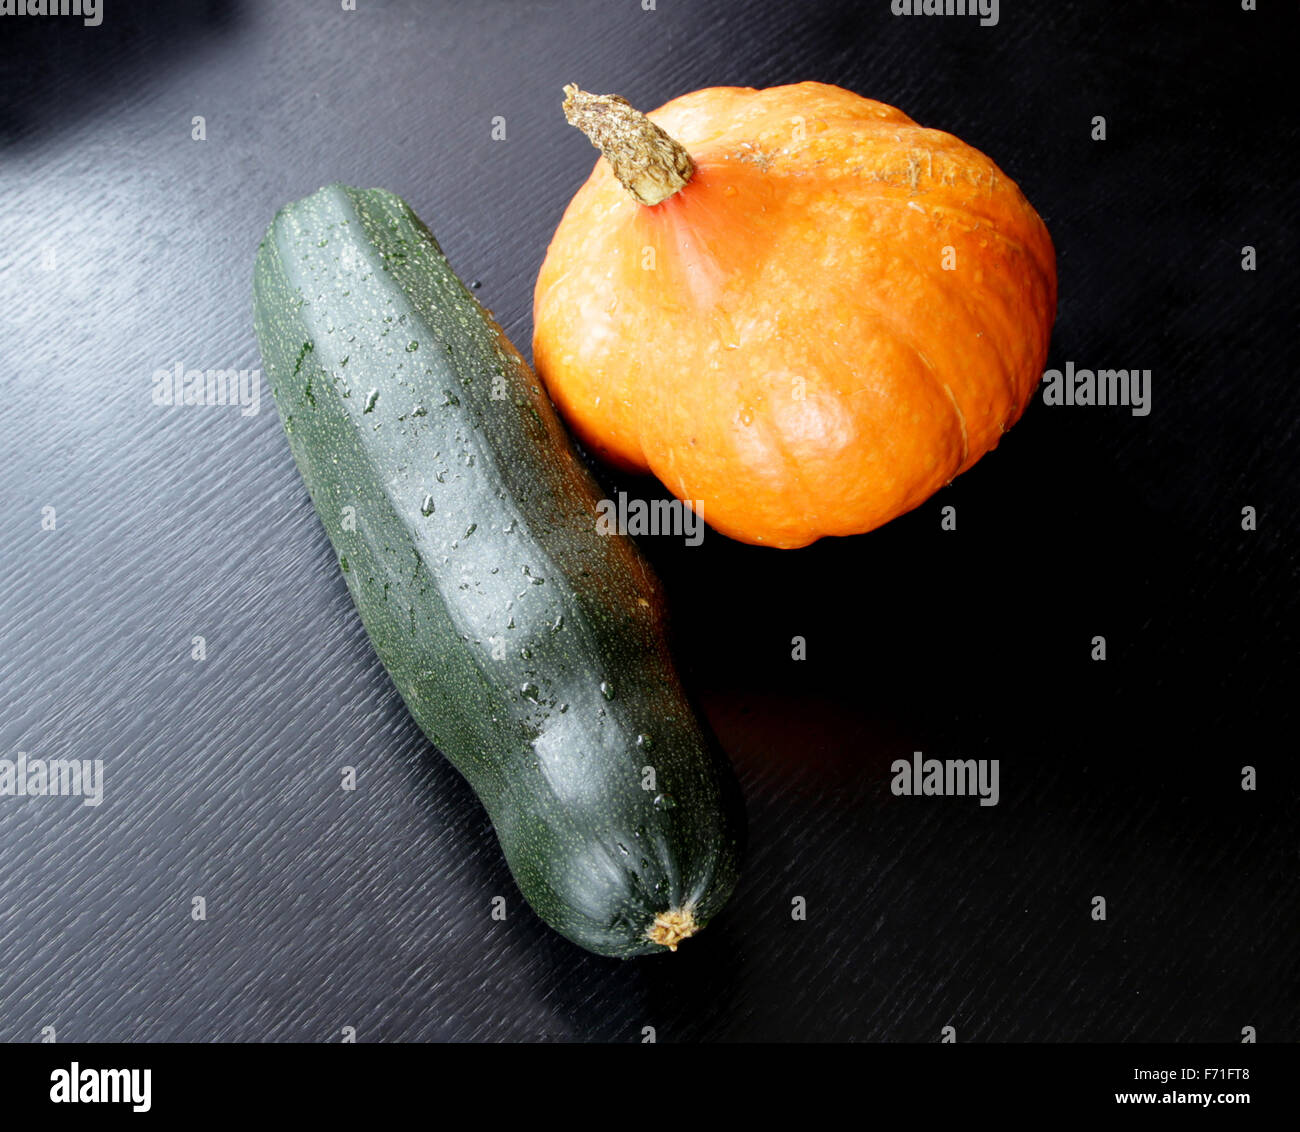 https://c8.alamy.com/comp/F71FT8/orange-pumpkin-and-green-squash-vegetable-marrow-on-black-table-F71FT8.jpg